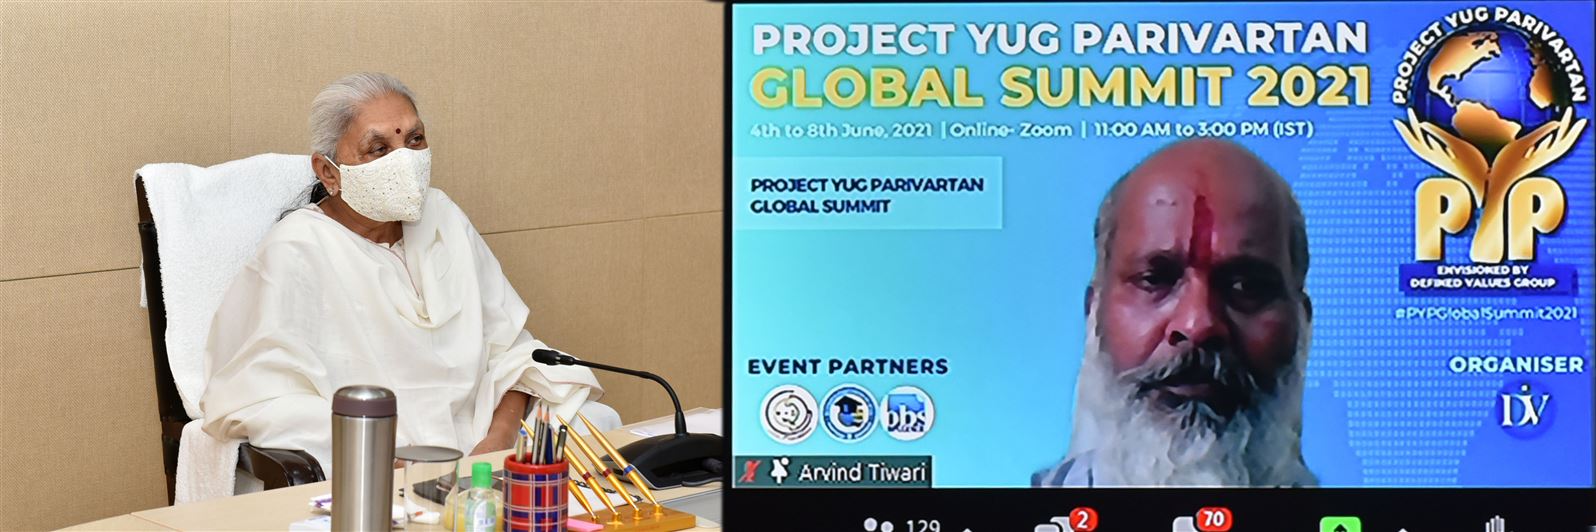 The Governor addressed ‘Project Yug Parivartan Vaishvik Shikhar Sammelan-2021’ webinar./राज्यपाल ने ‘प्रोजेक्ट युग परिवर्तन वैश्विक शिखर सम्मेलन-2021’ विषयक वेबिनार को संबोधित किया